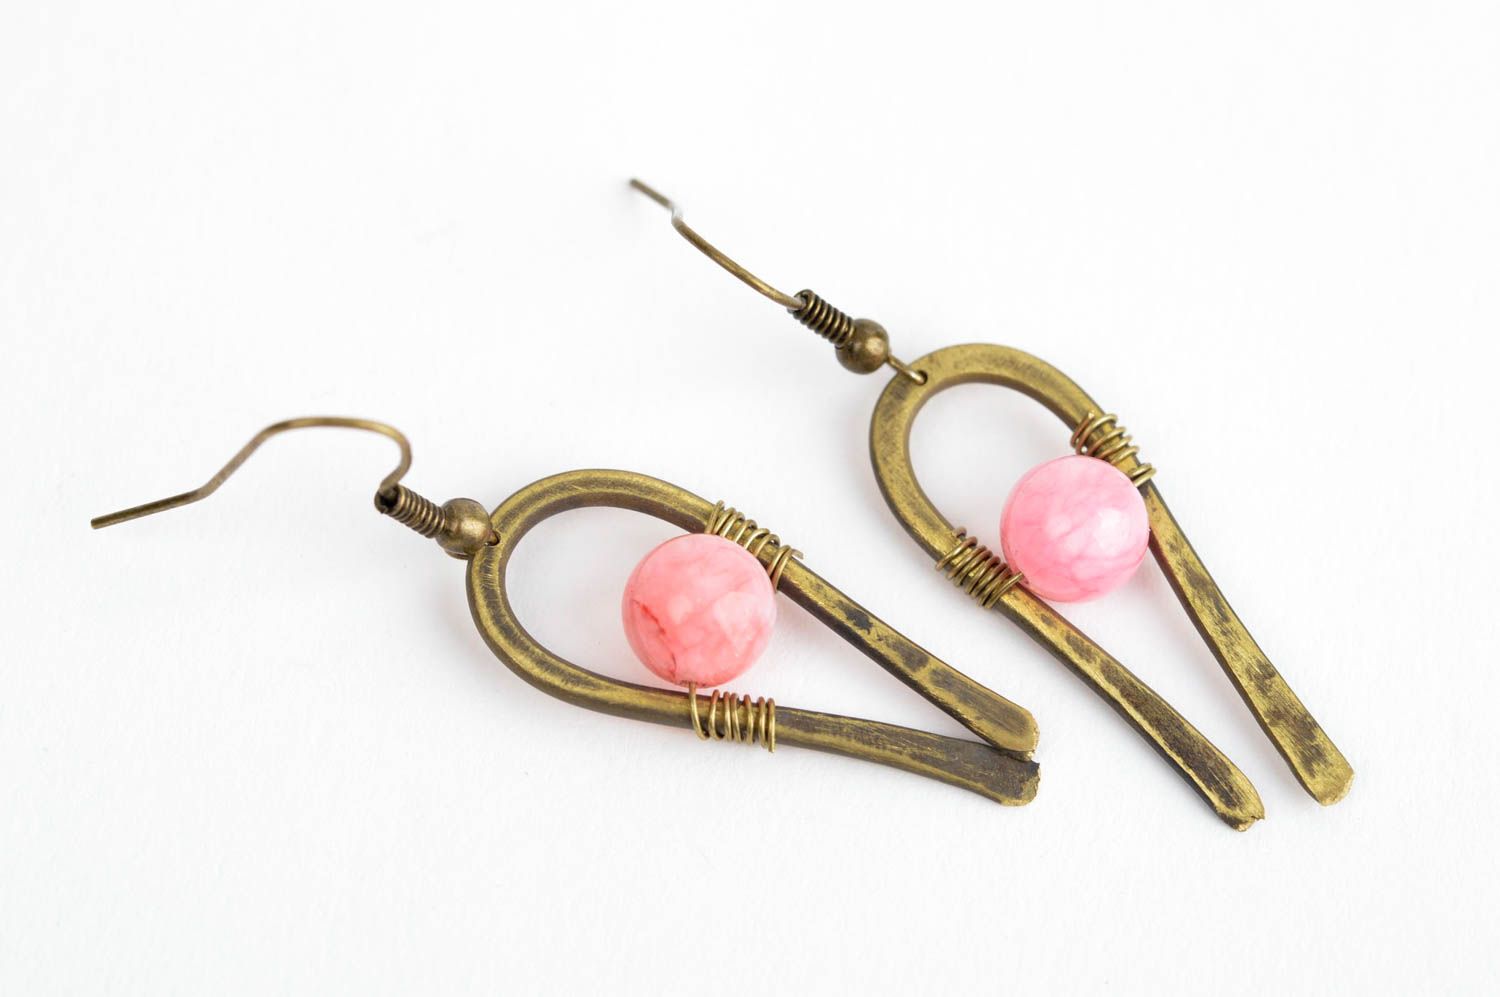 Womens handmade metal earrings cool earrings costume jewelry designs gift ideas photo 3